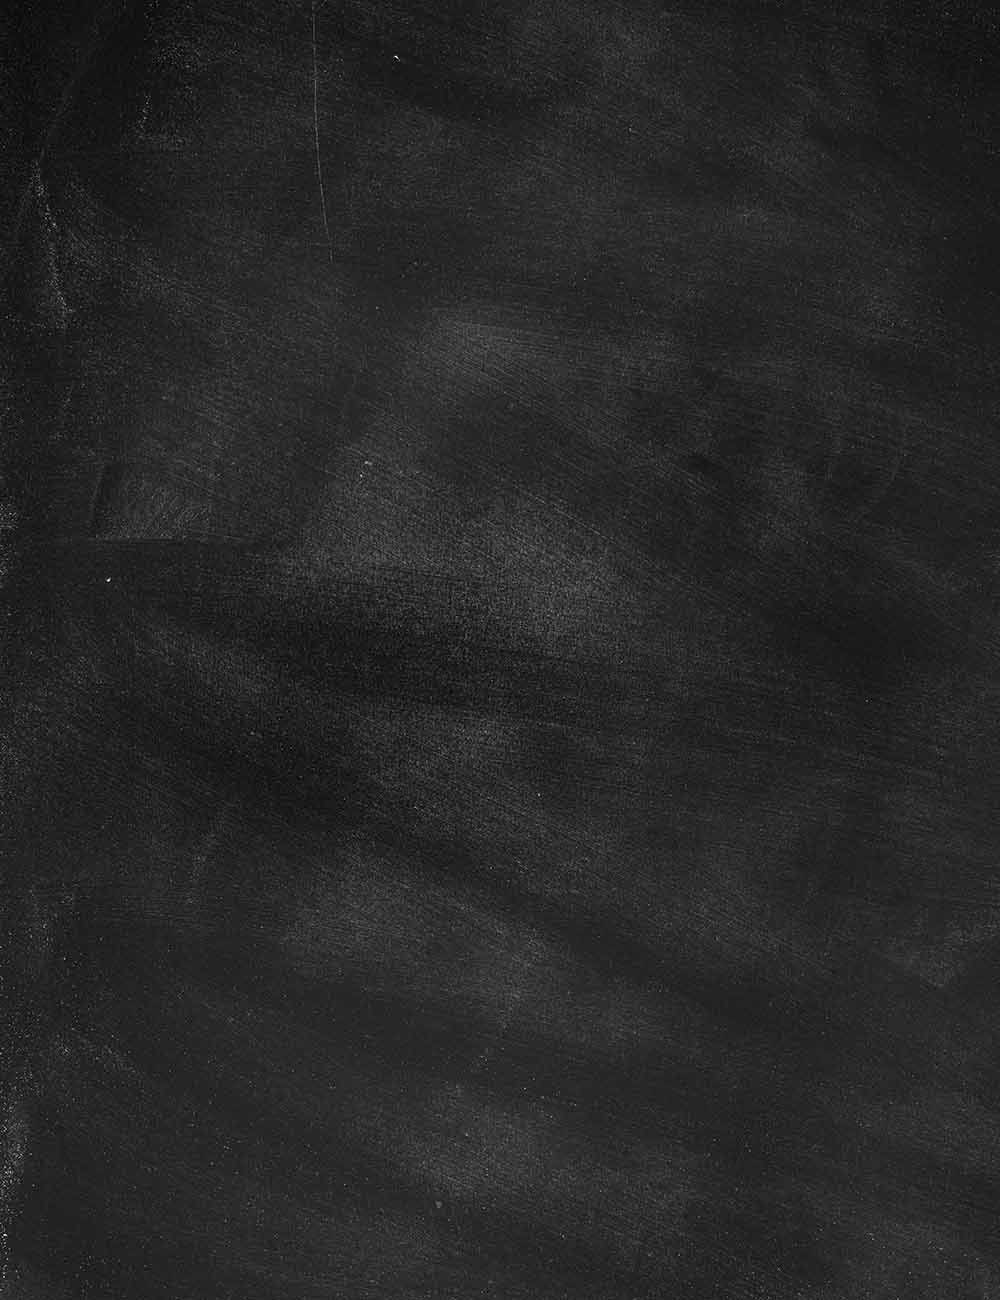 Blackboard With Little White Chalk Dust Backdrop For Photo Studio Shopbackdrop